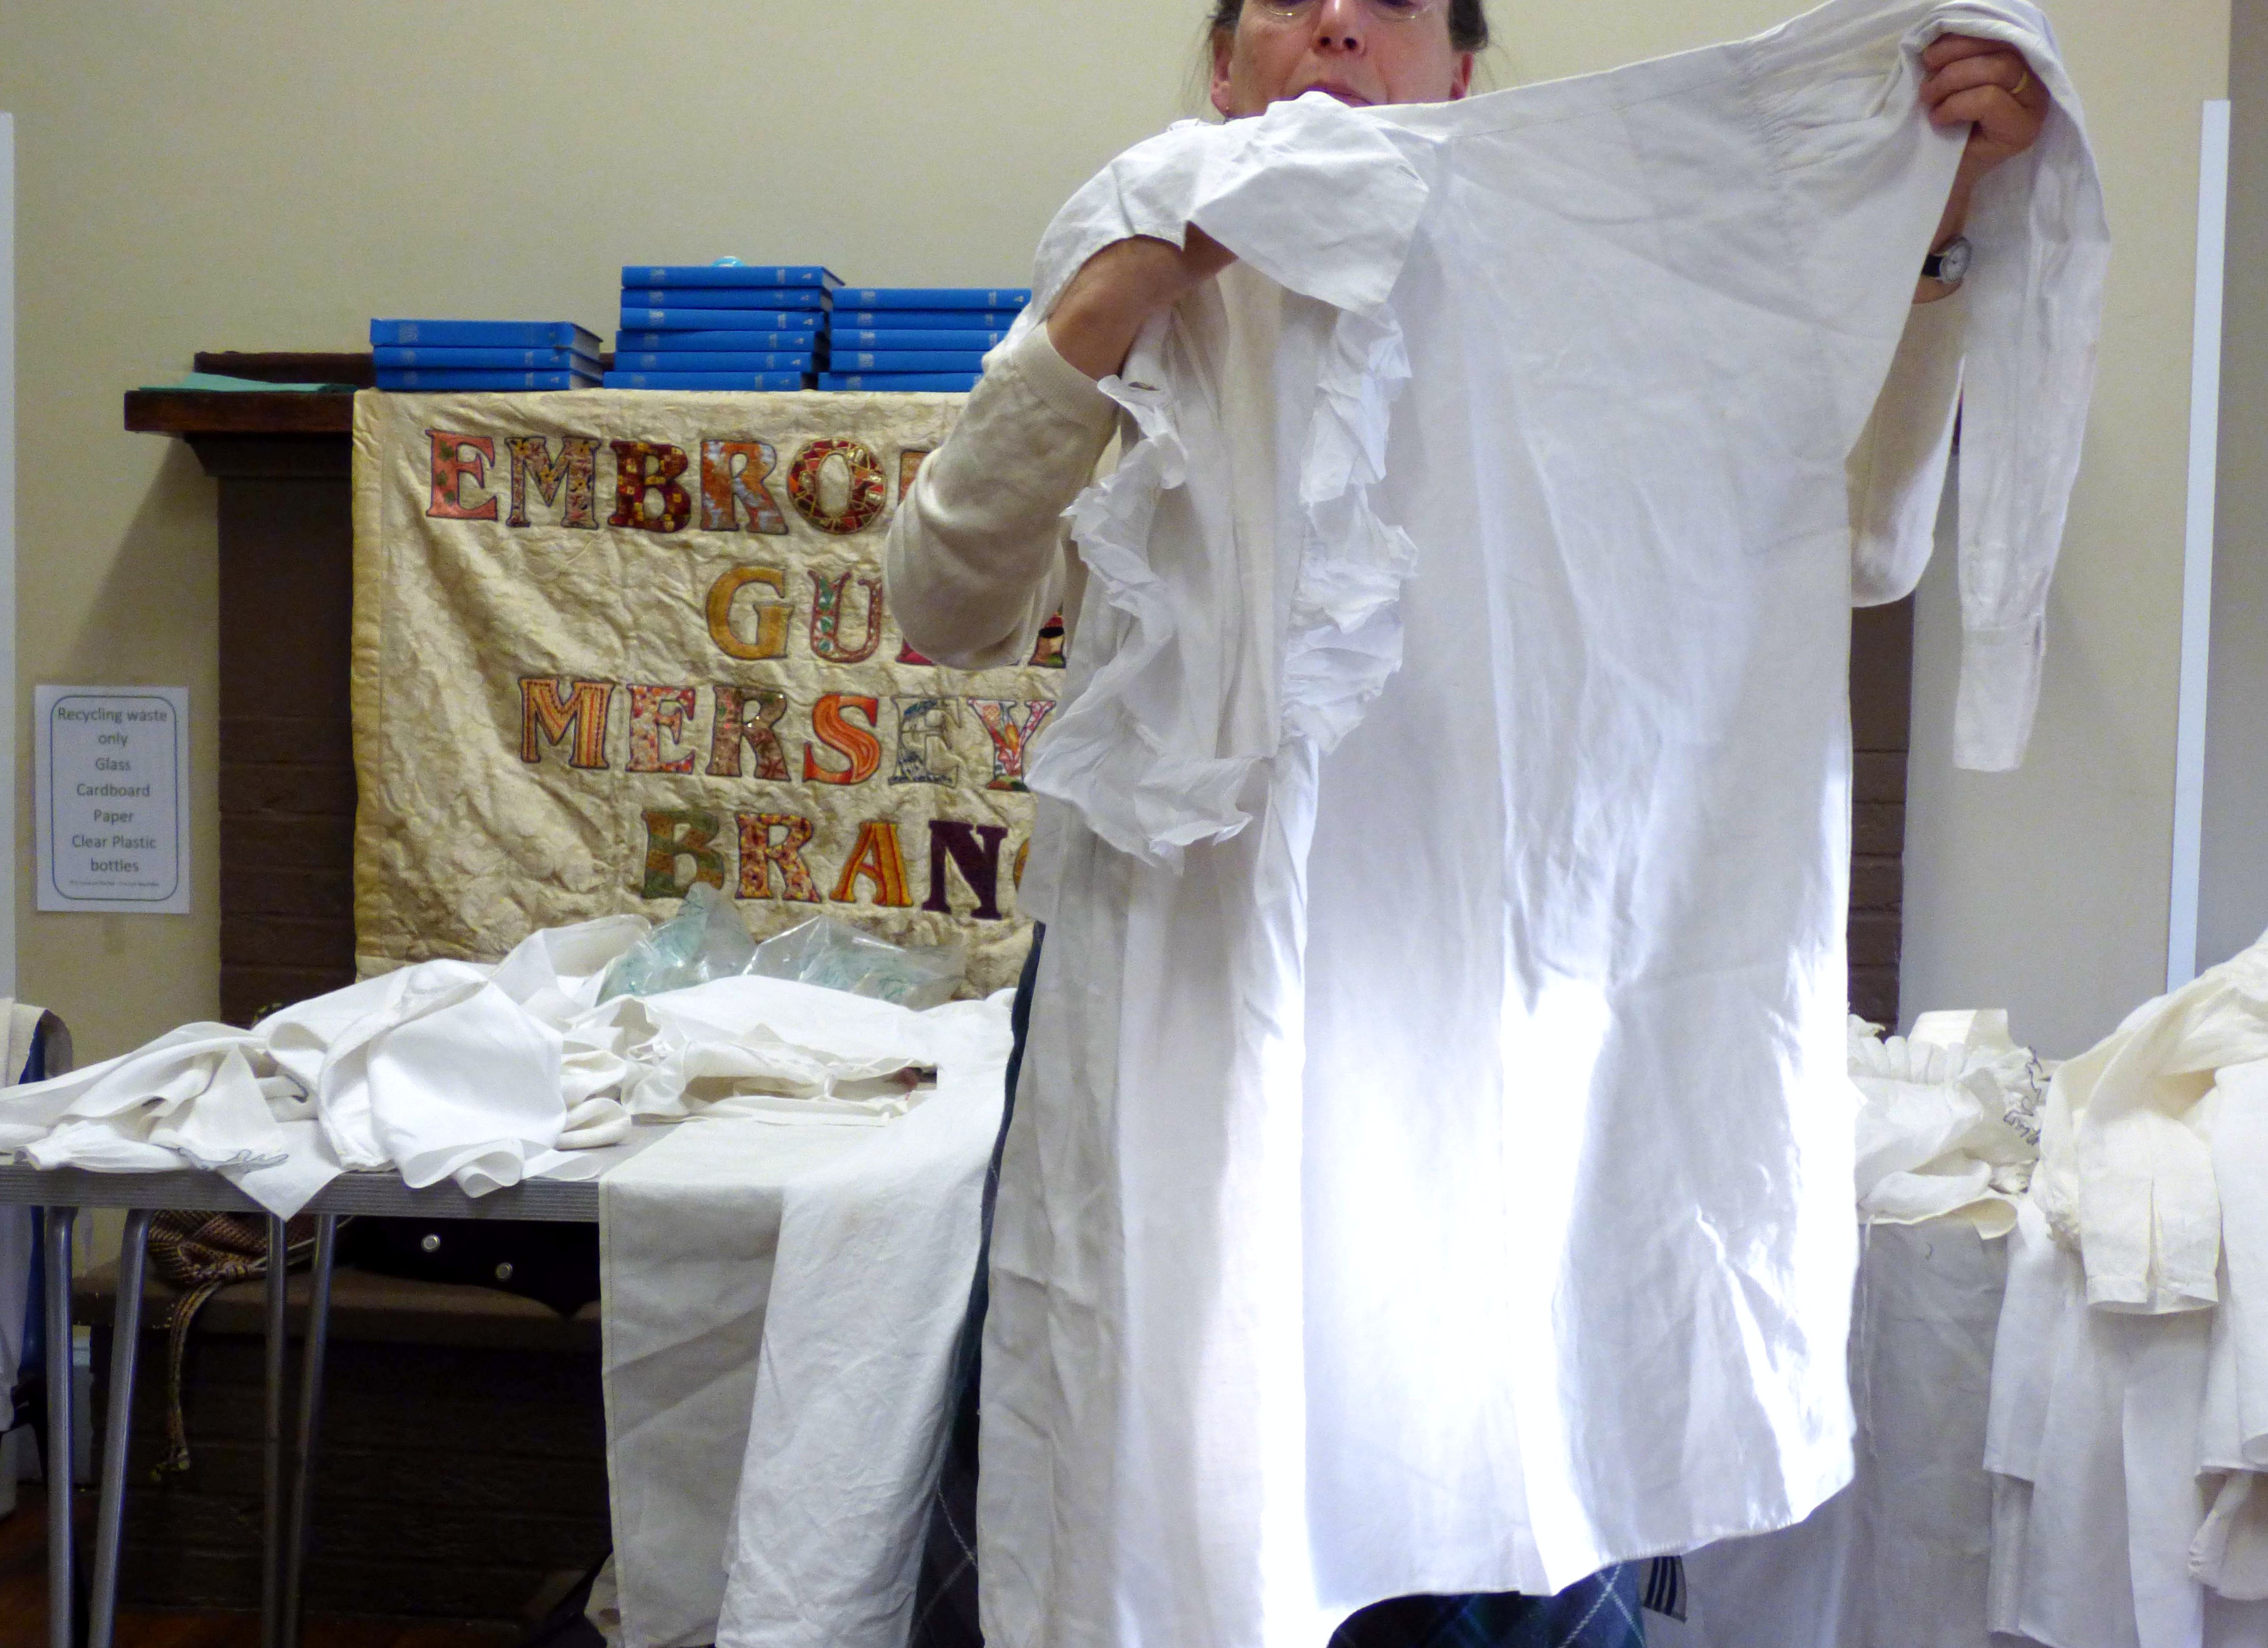 Sarah Thursfield  Talk "Of Seamstresses and Shirts: Plain and Not-So-Plain Sewing", Jan 2020